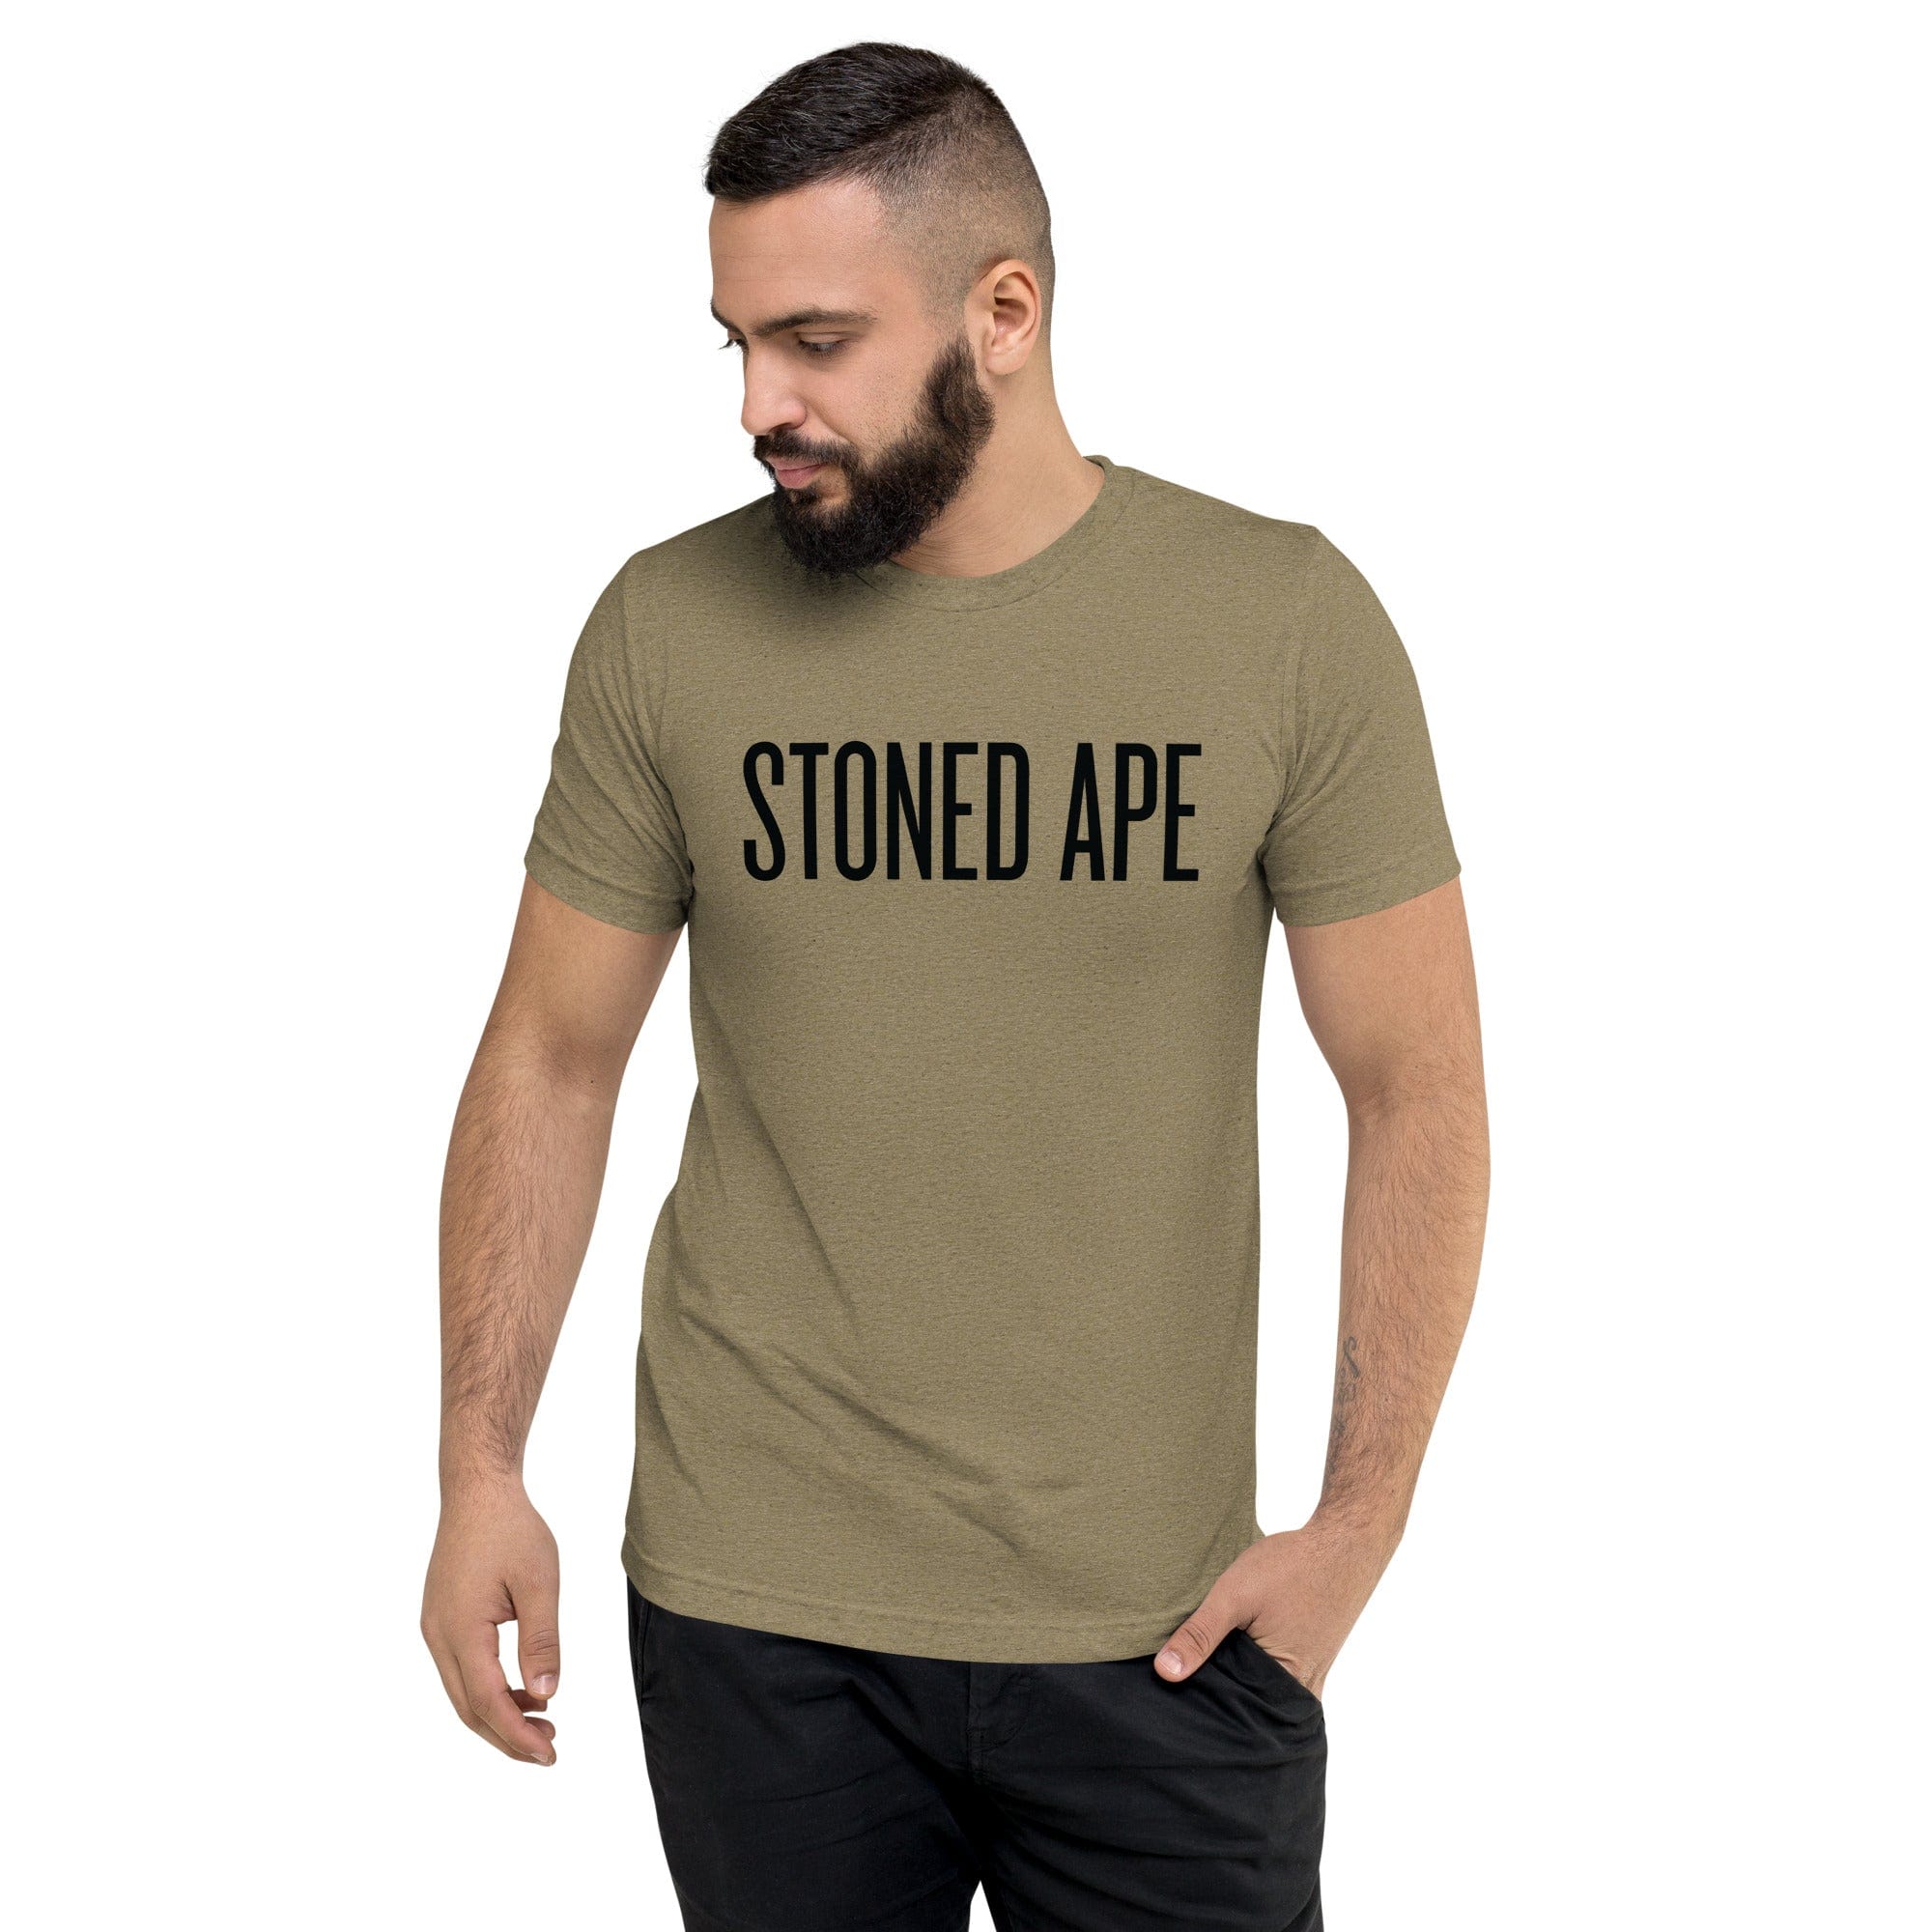 man wearing olive green stoned ape t-shirt